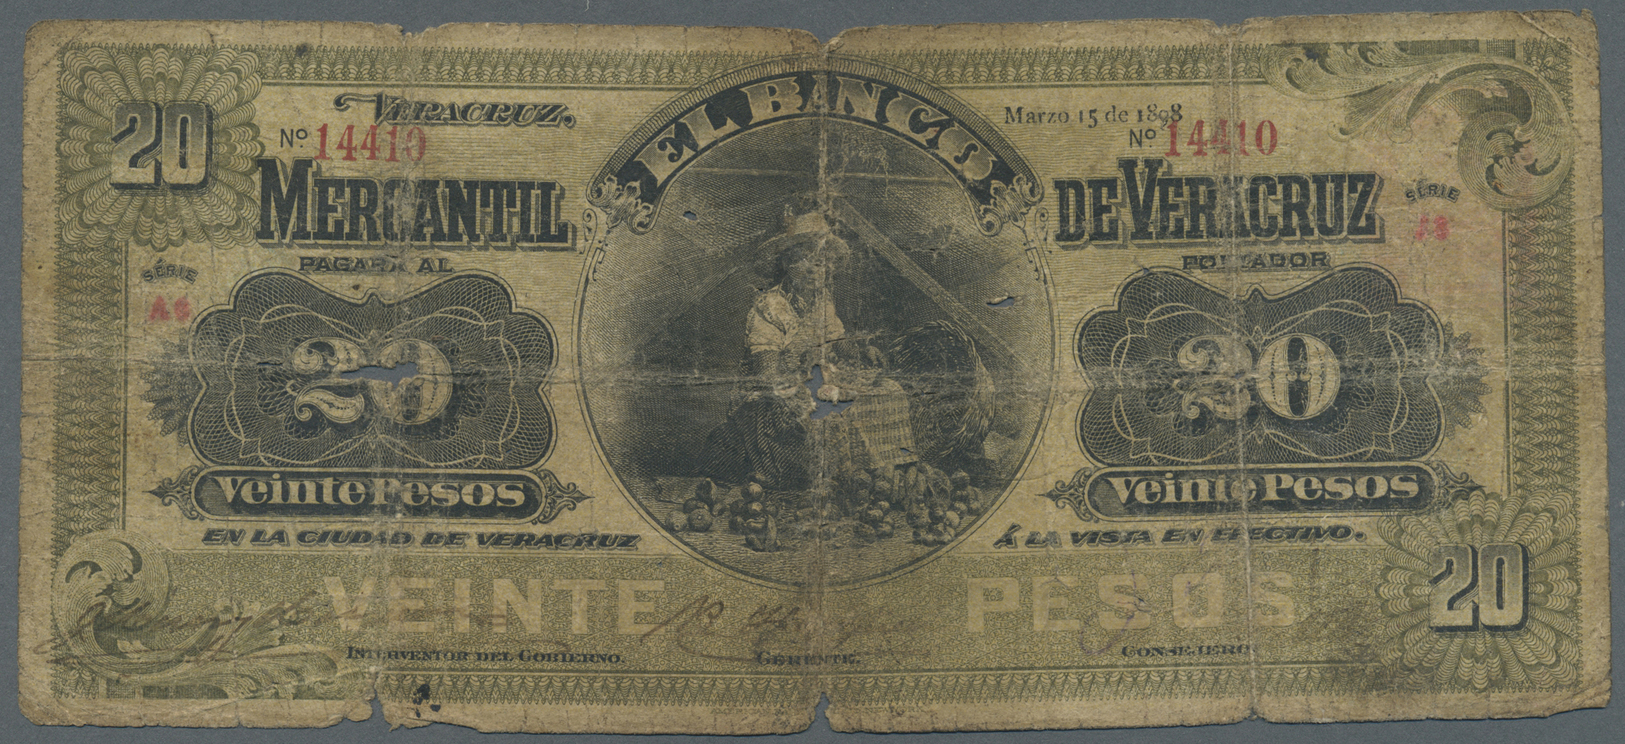 01719 Mexico: El Banco Mercantil De Veracruz 20 Pesos 1898 P. S440a Earliest Date Listed, Stronger Used With Very Strong - Mexico